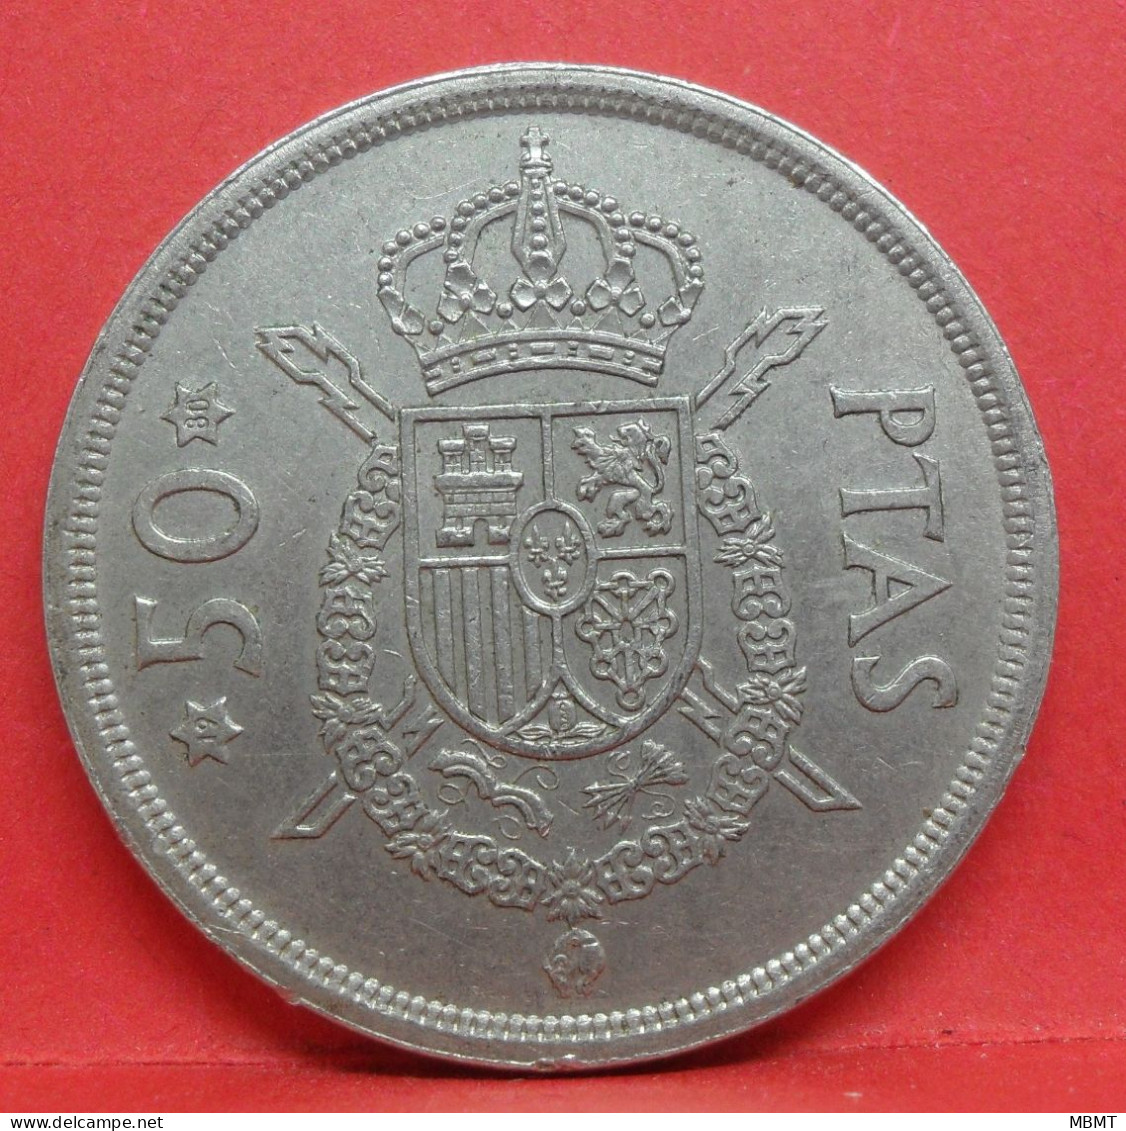 50 Pesetas 1975 étoile 80 - TTB - Pièce Monnaie Espagne - Article N°2484 - 50 Pesetas